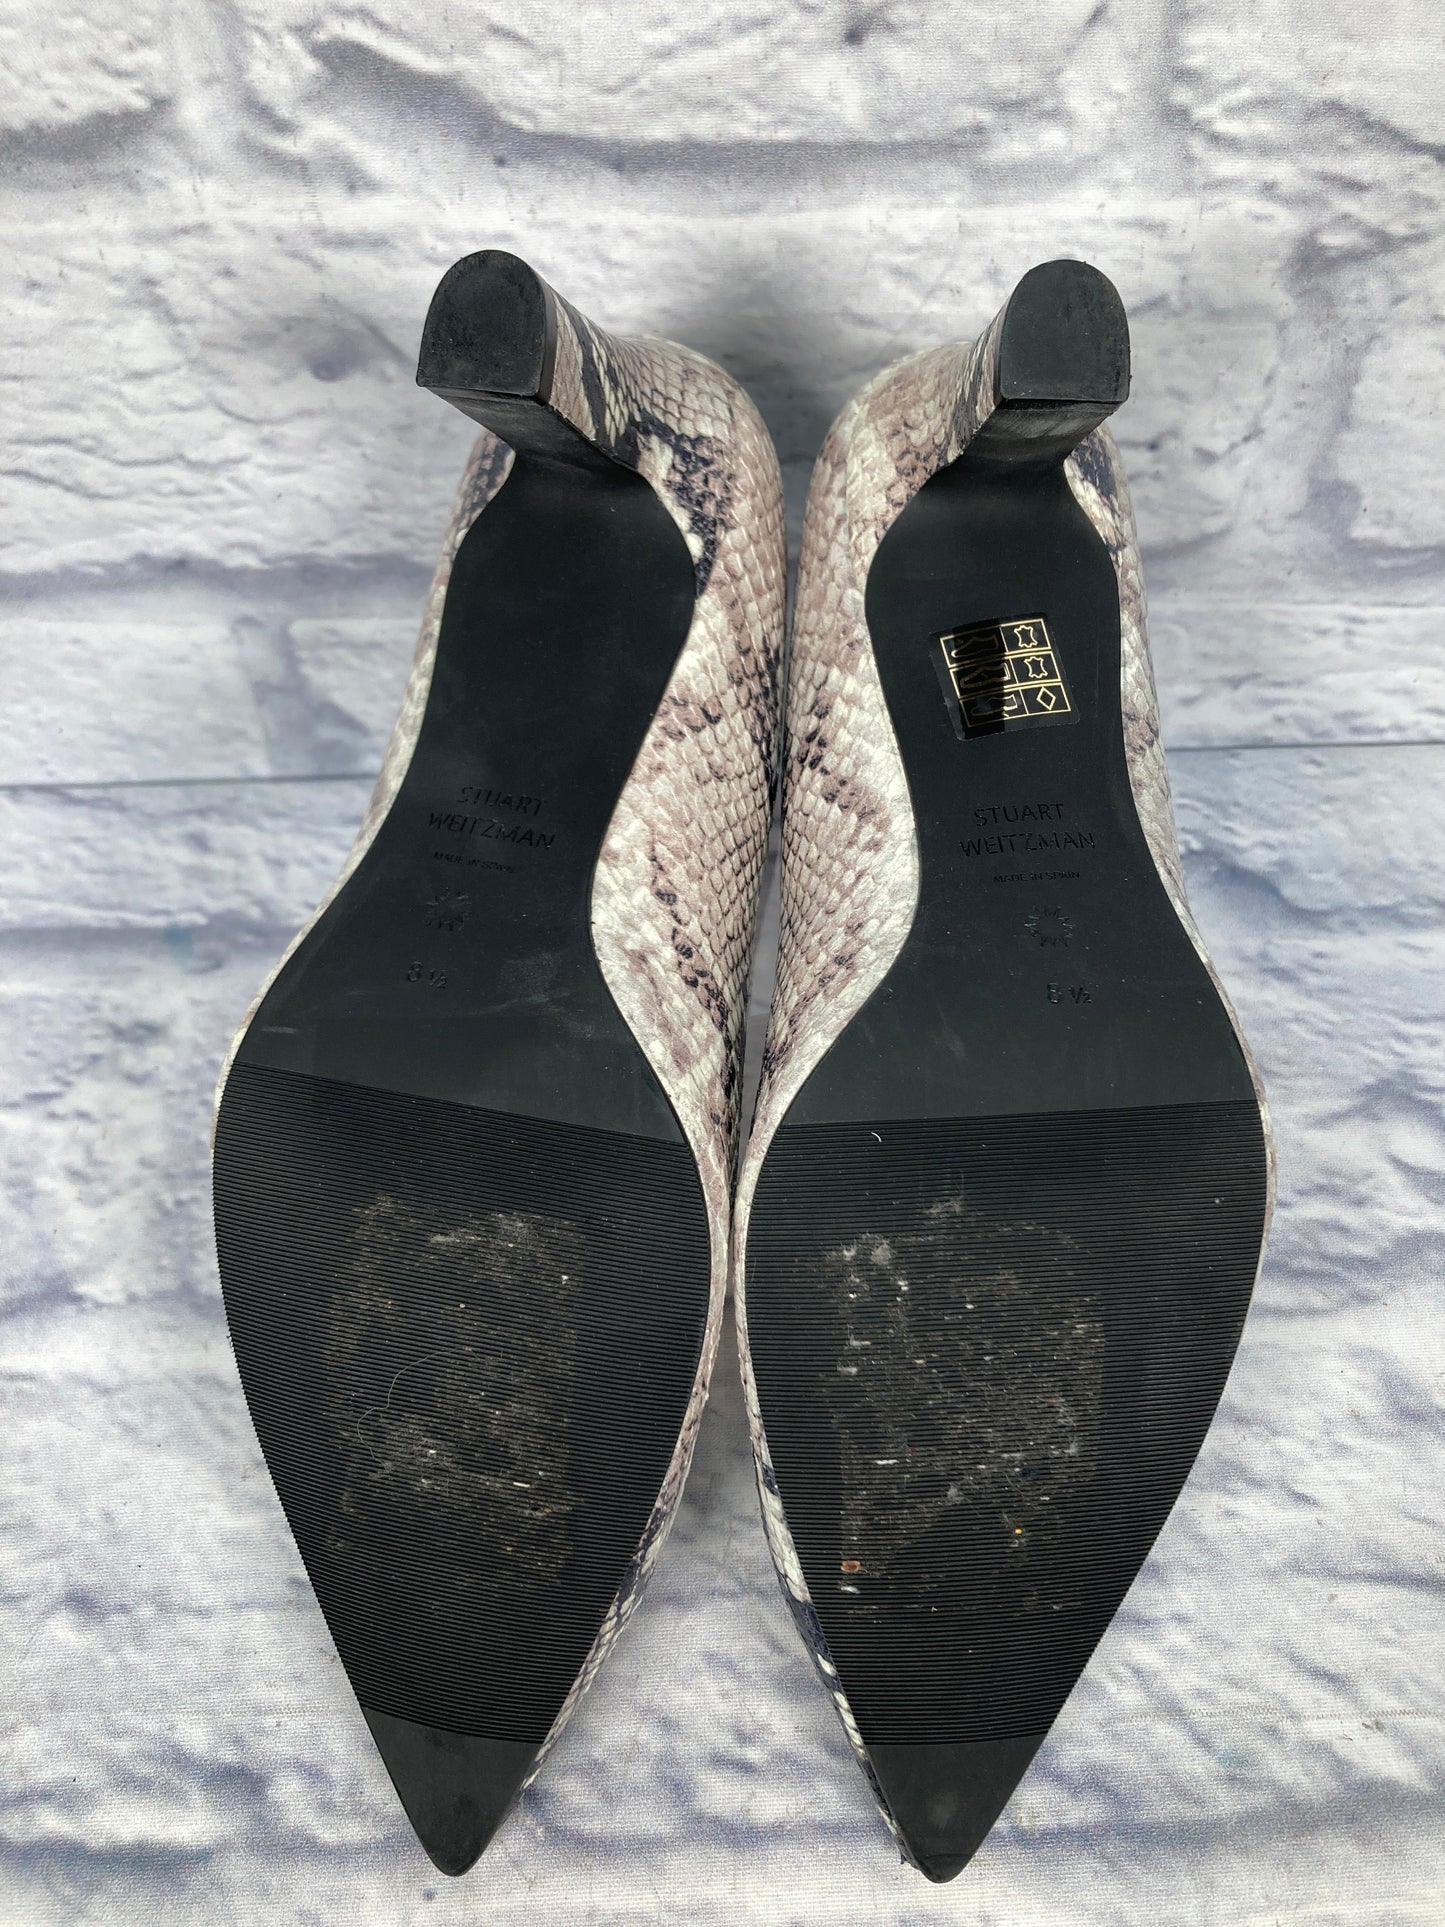 Snakeskin Print Shoes Heels Block Stuart Weitzman, Size 8.5